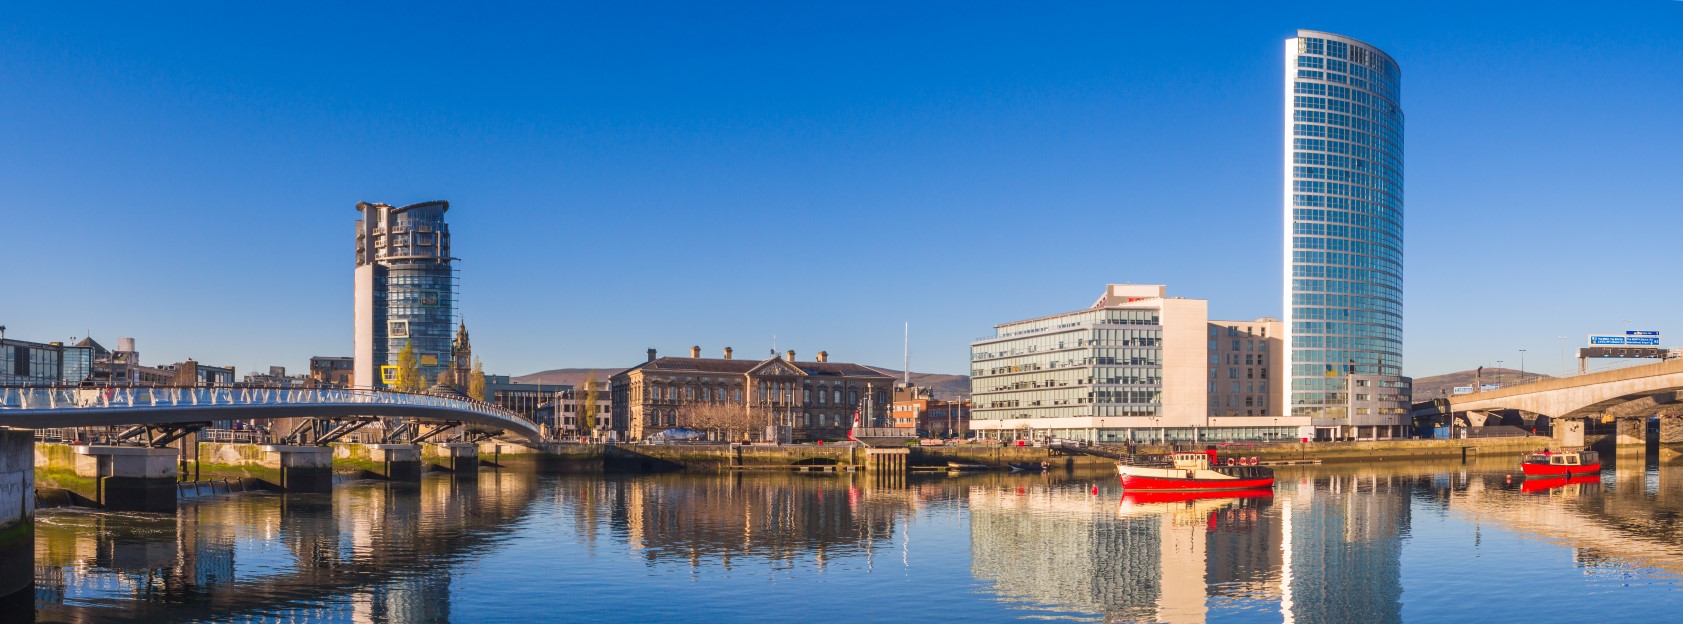 Belfast river panorama Credit: Shutterstock_Mcimage